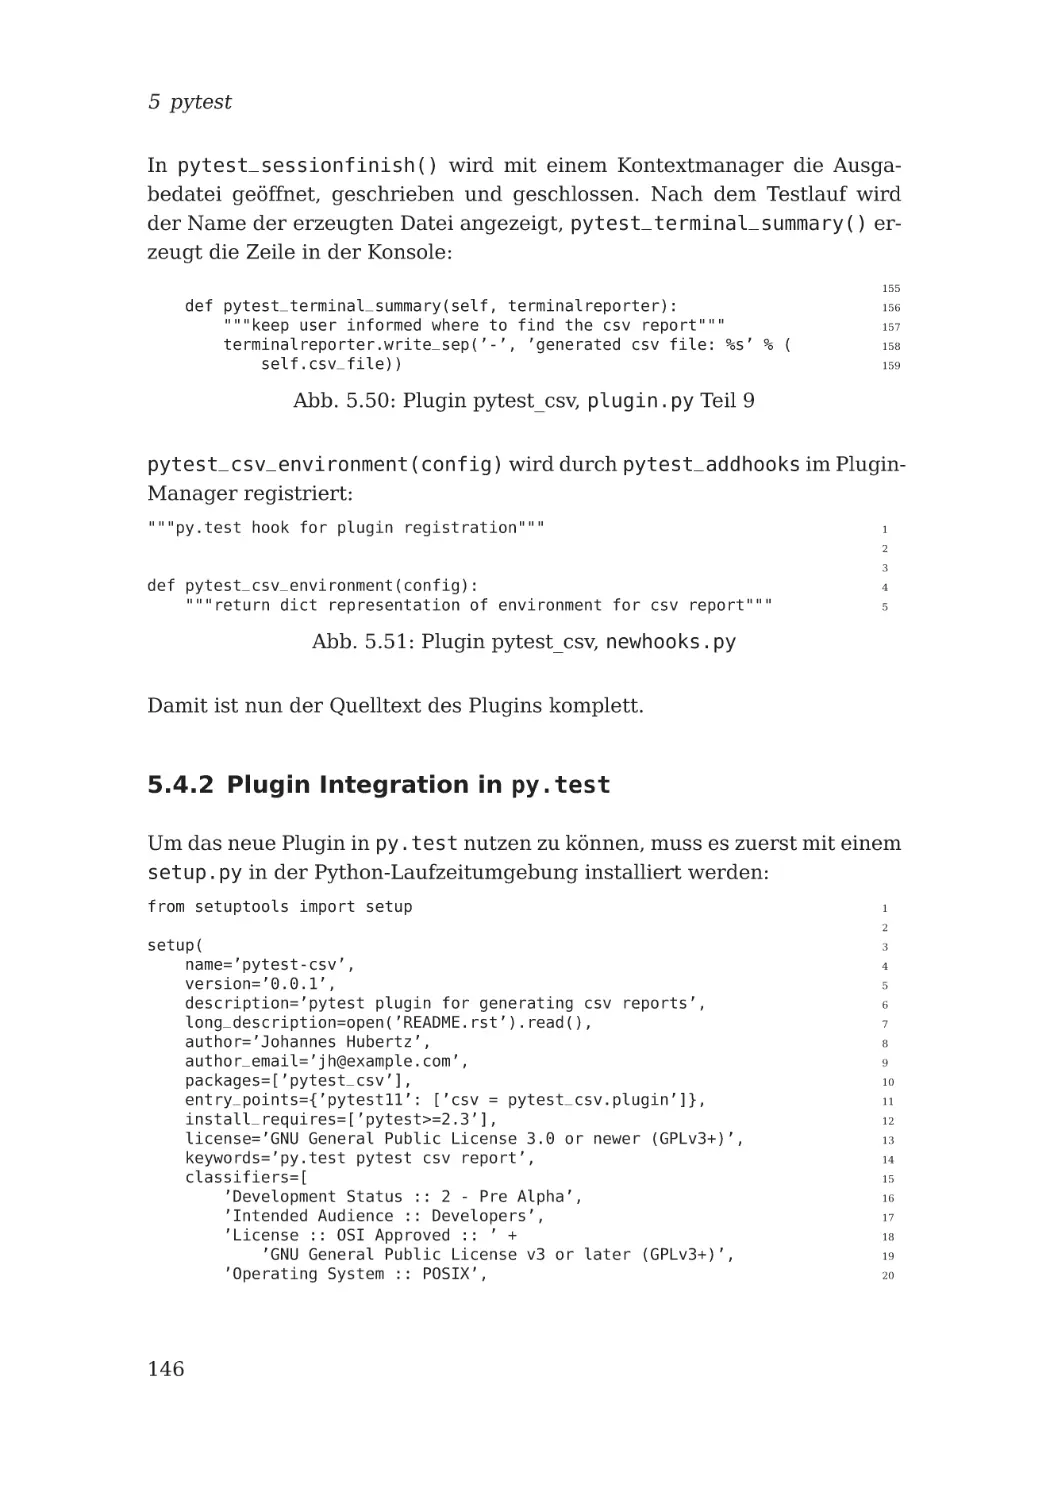 5.4.2 Plugin Integration in py.test